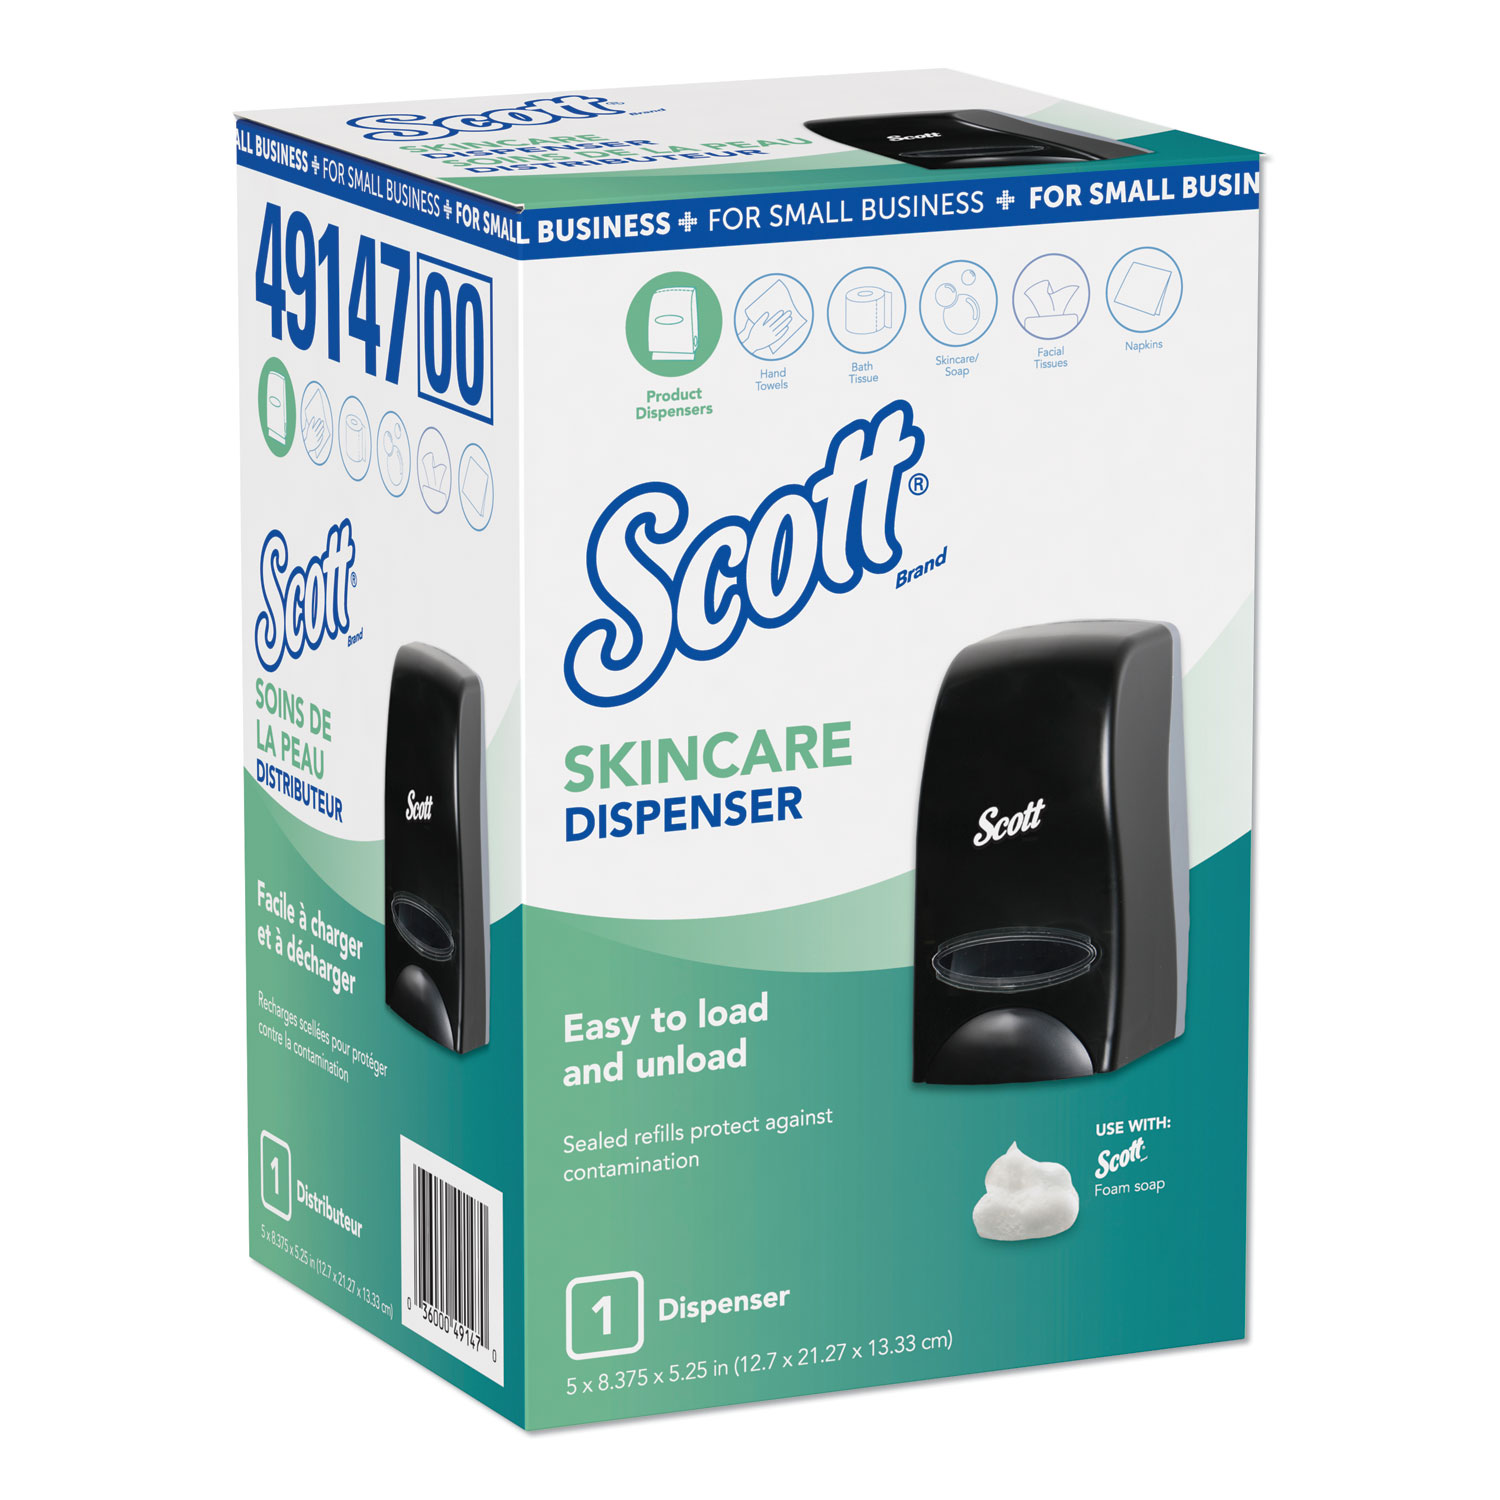  Scott 49147 Essential Manual Skin Care Dispenser, 1000 mL, 5.43 x 4.85 x 8.36, For Small Business, Black (KCC49147) 